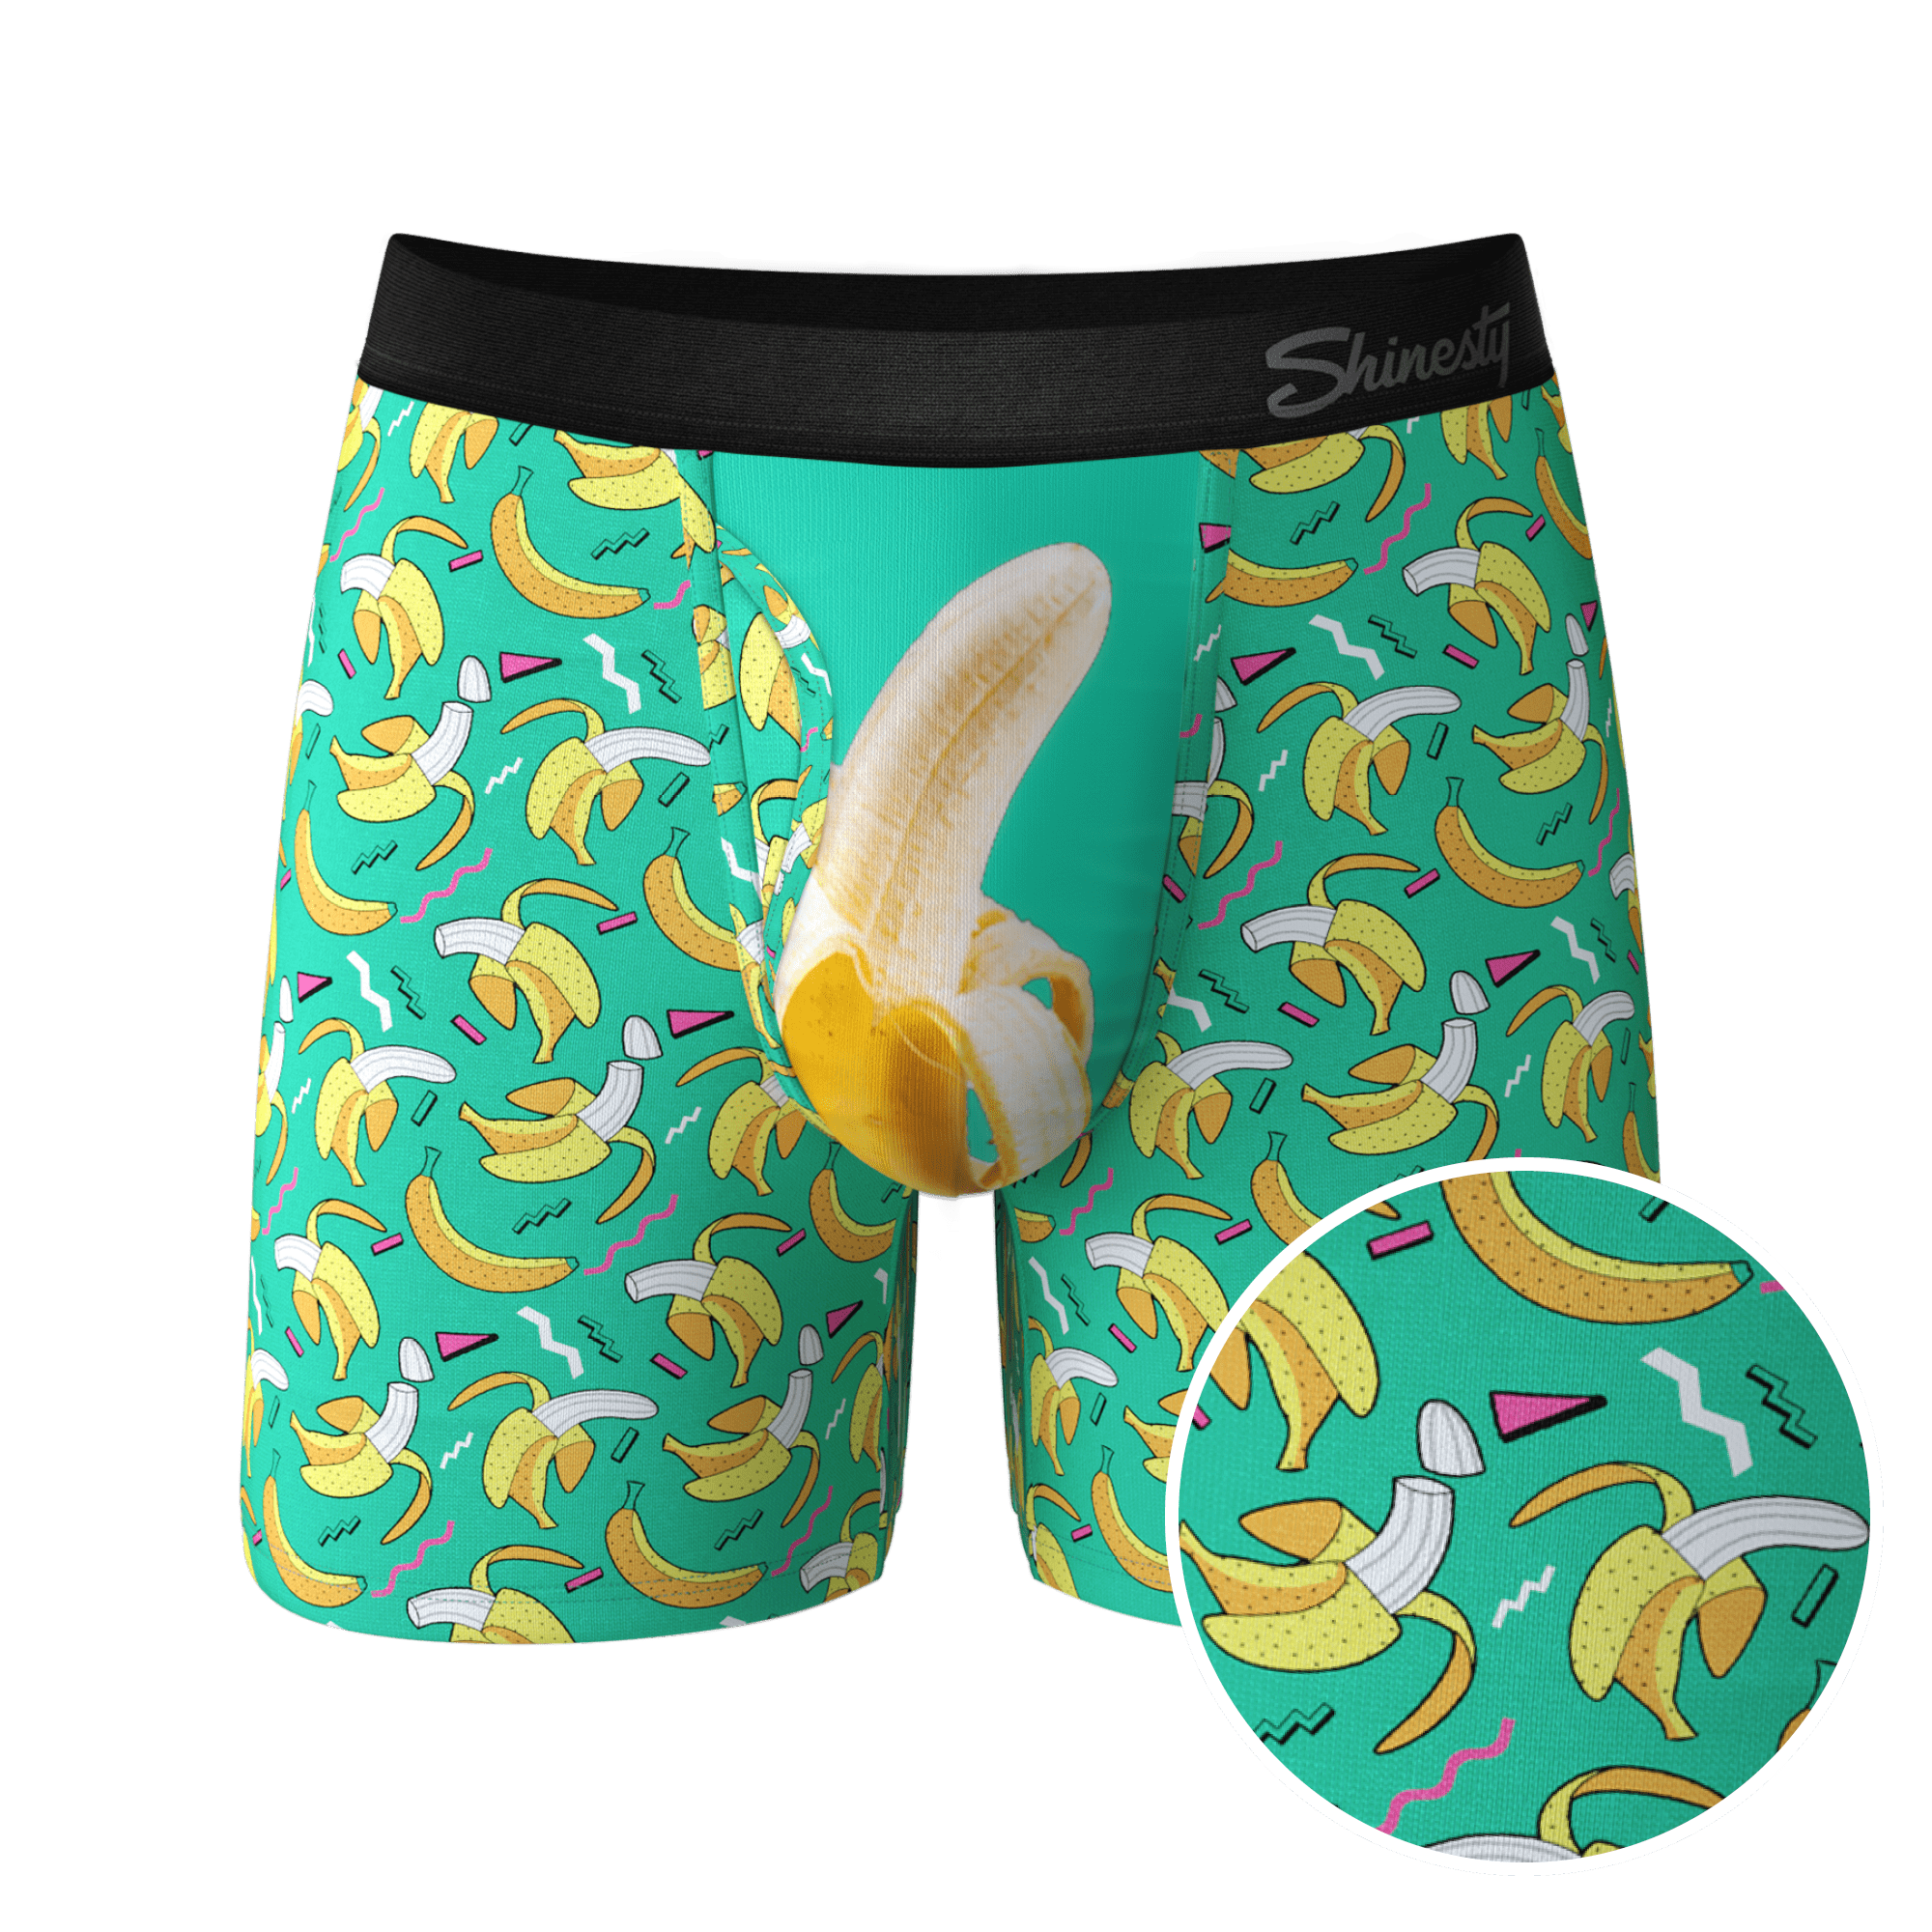 The Peel Deal - Shinesty Retro Banana Ball Hammock Pouch Underwear With Fly  XL